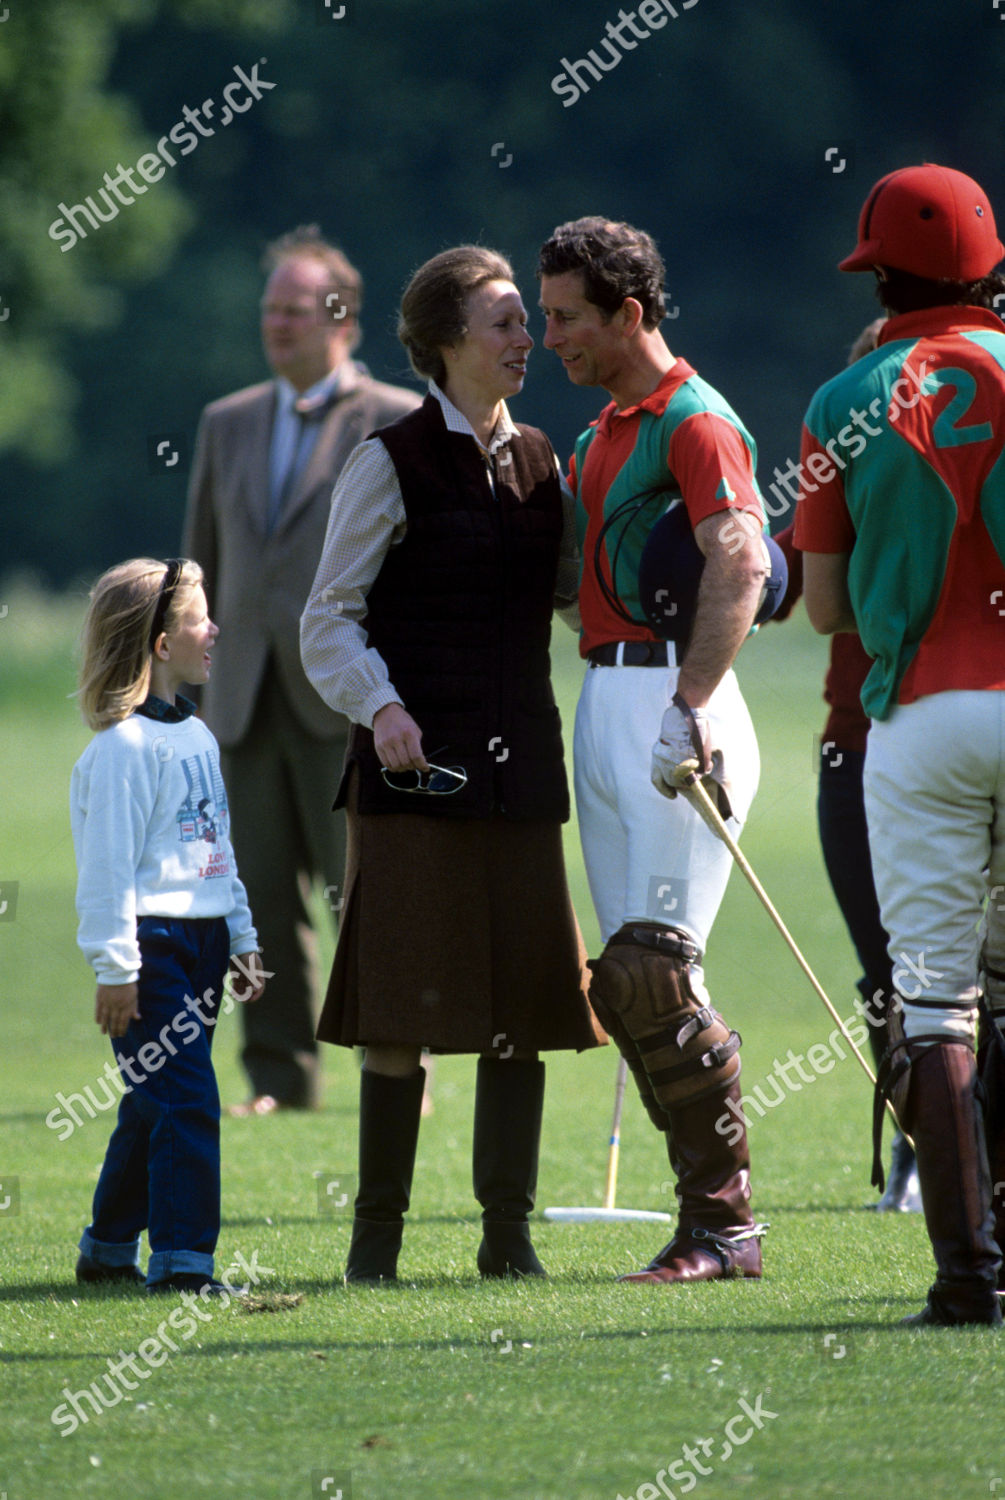 polo-match-cirencester-britain-1988-shutterstock-editorial-146880a.jpg